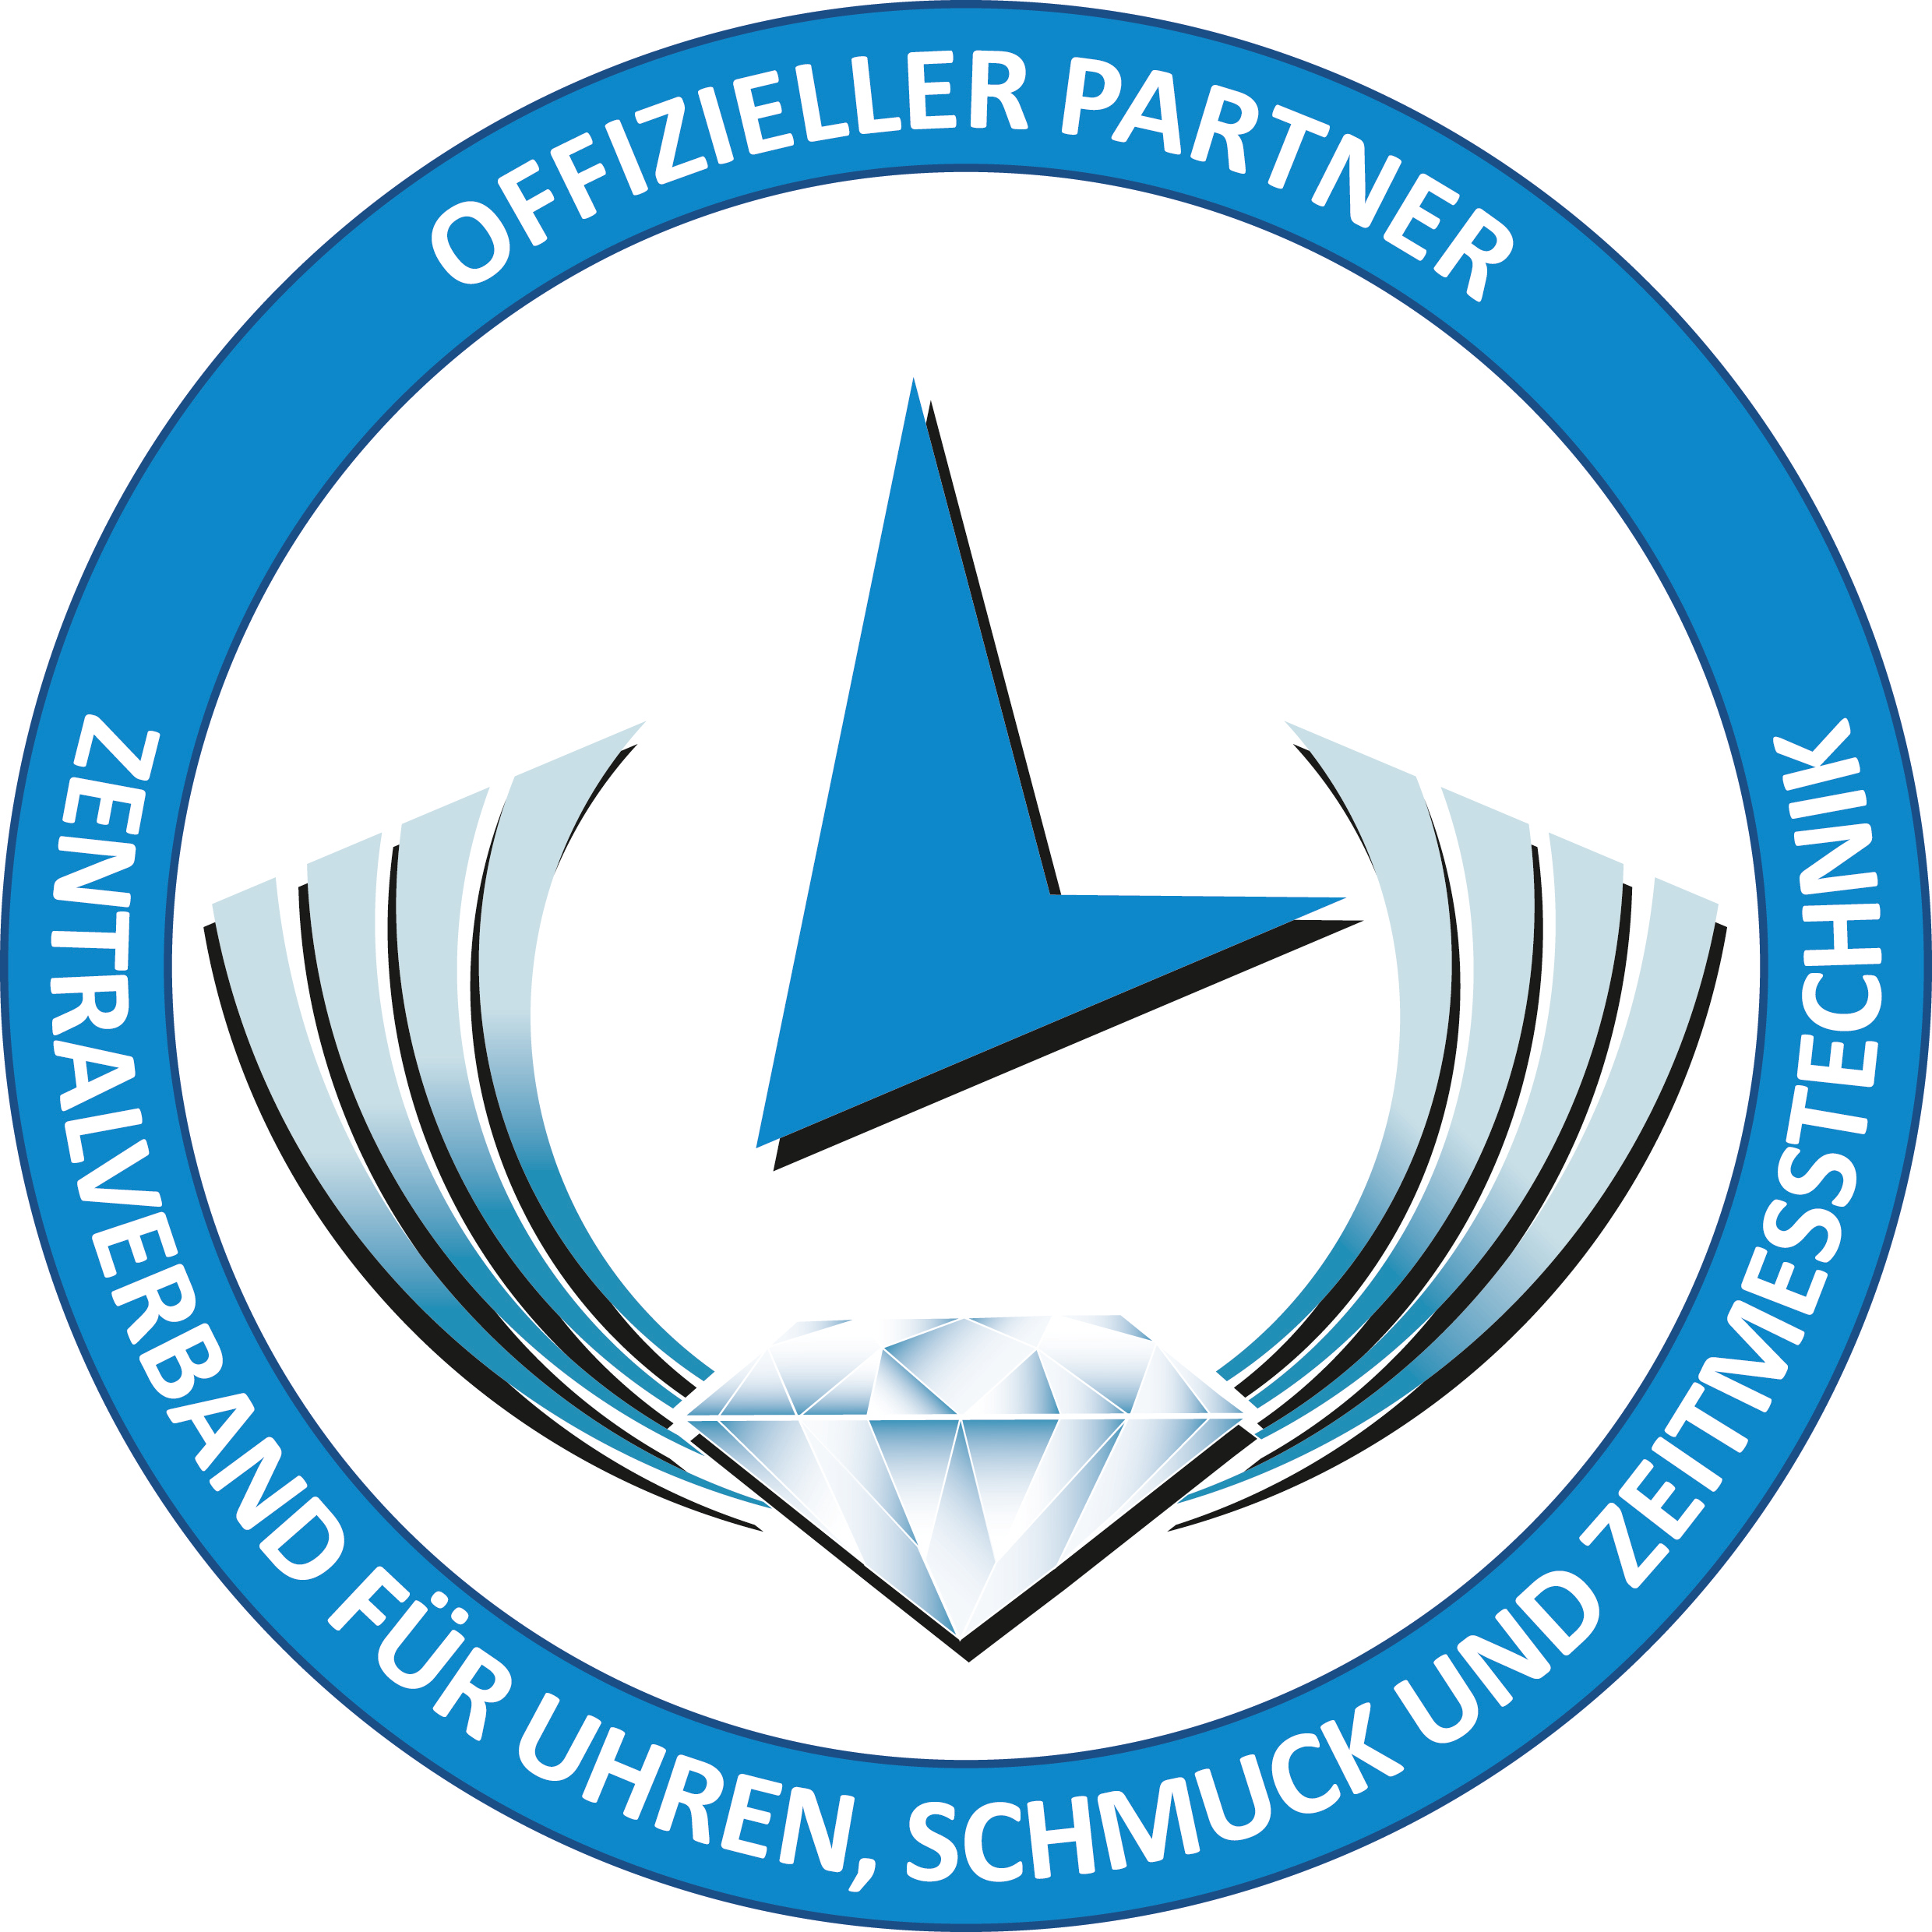 Logo SRGB Zentralverband OffiziellerPartner